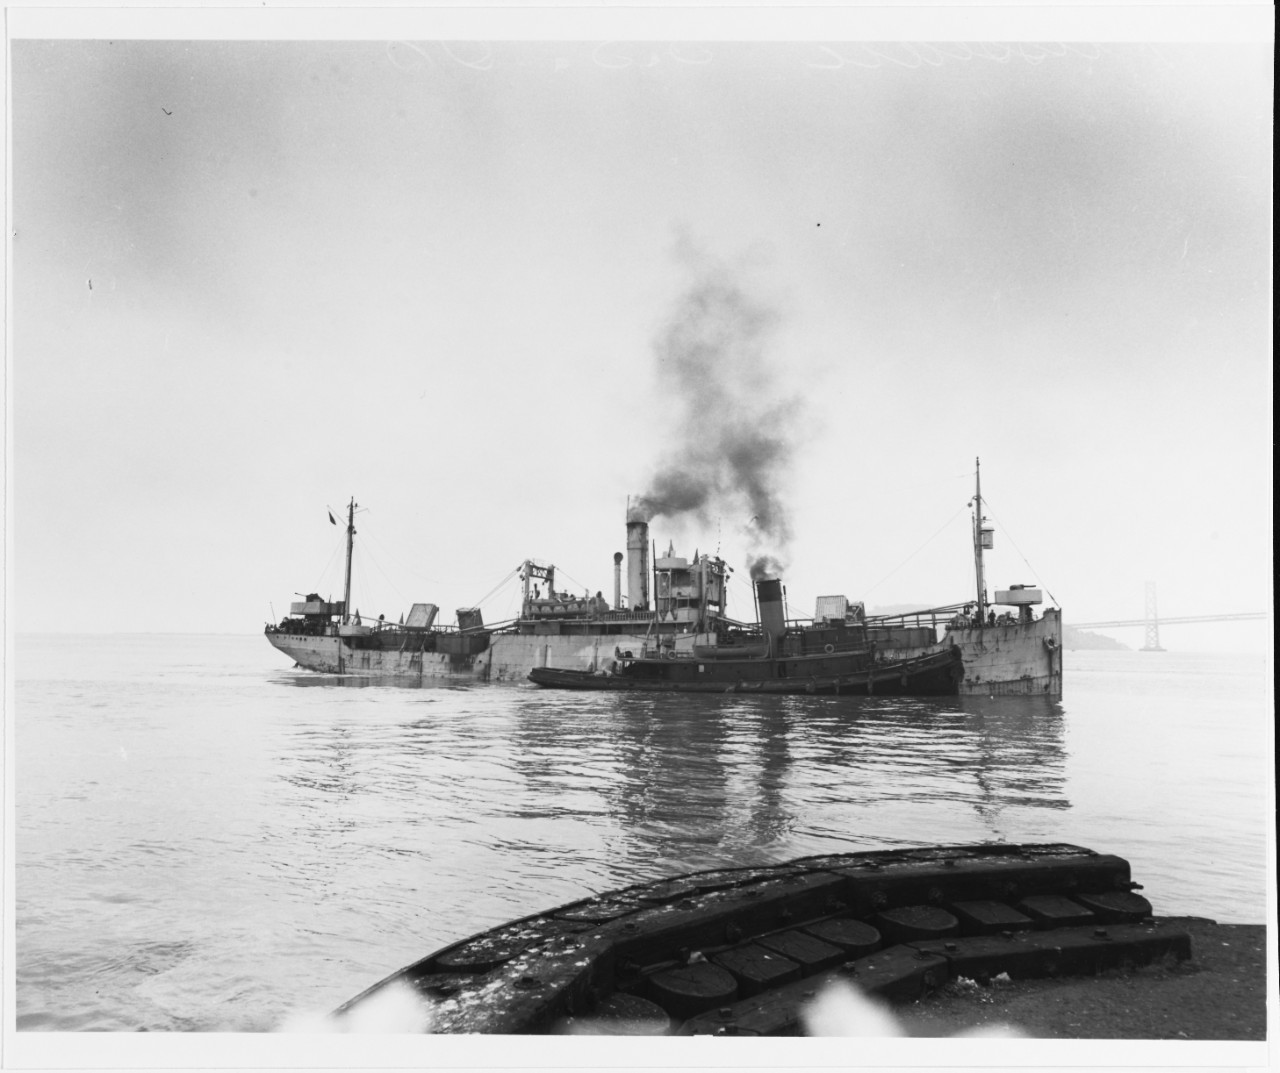 S.S. OB (U.S.S.R. Merchant Freighter, 1917-1944)